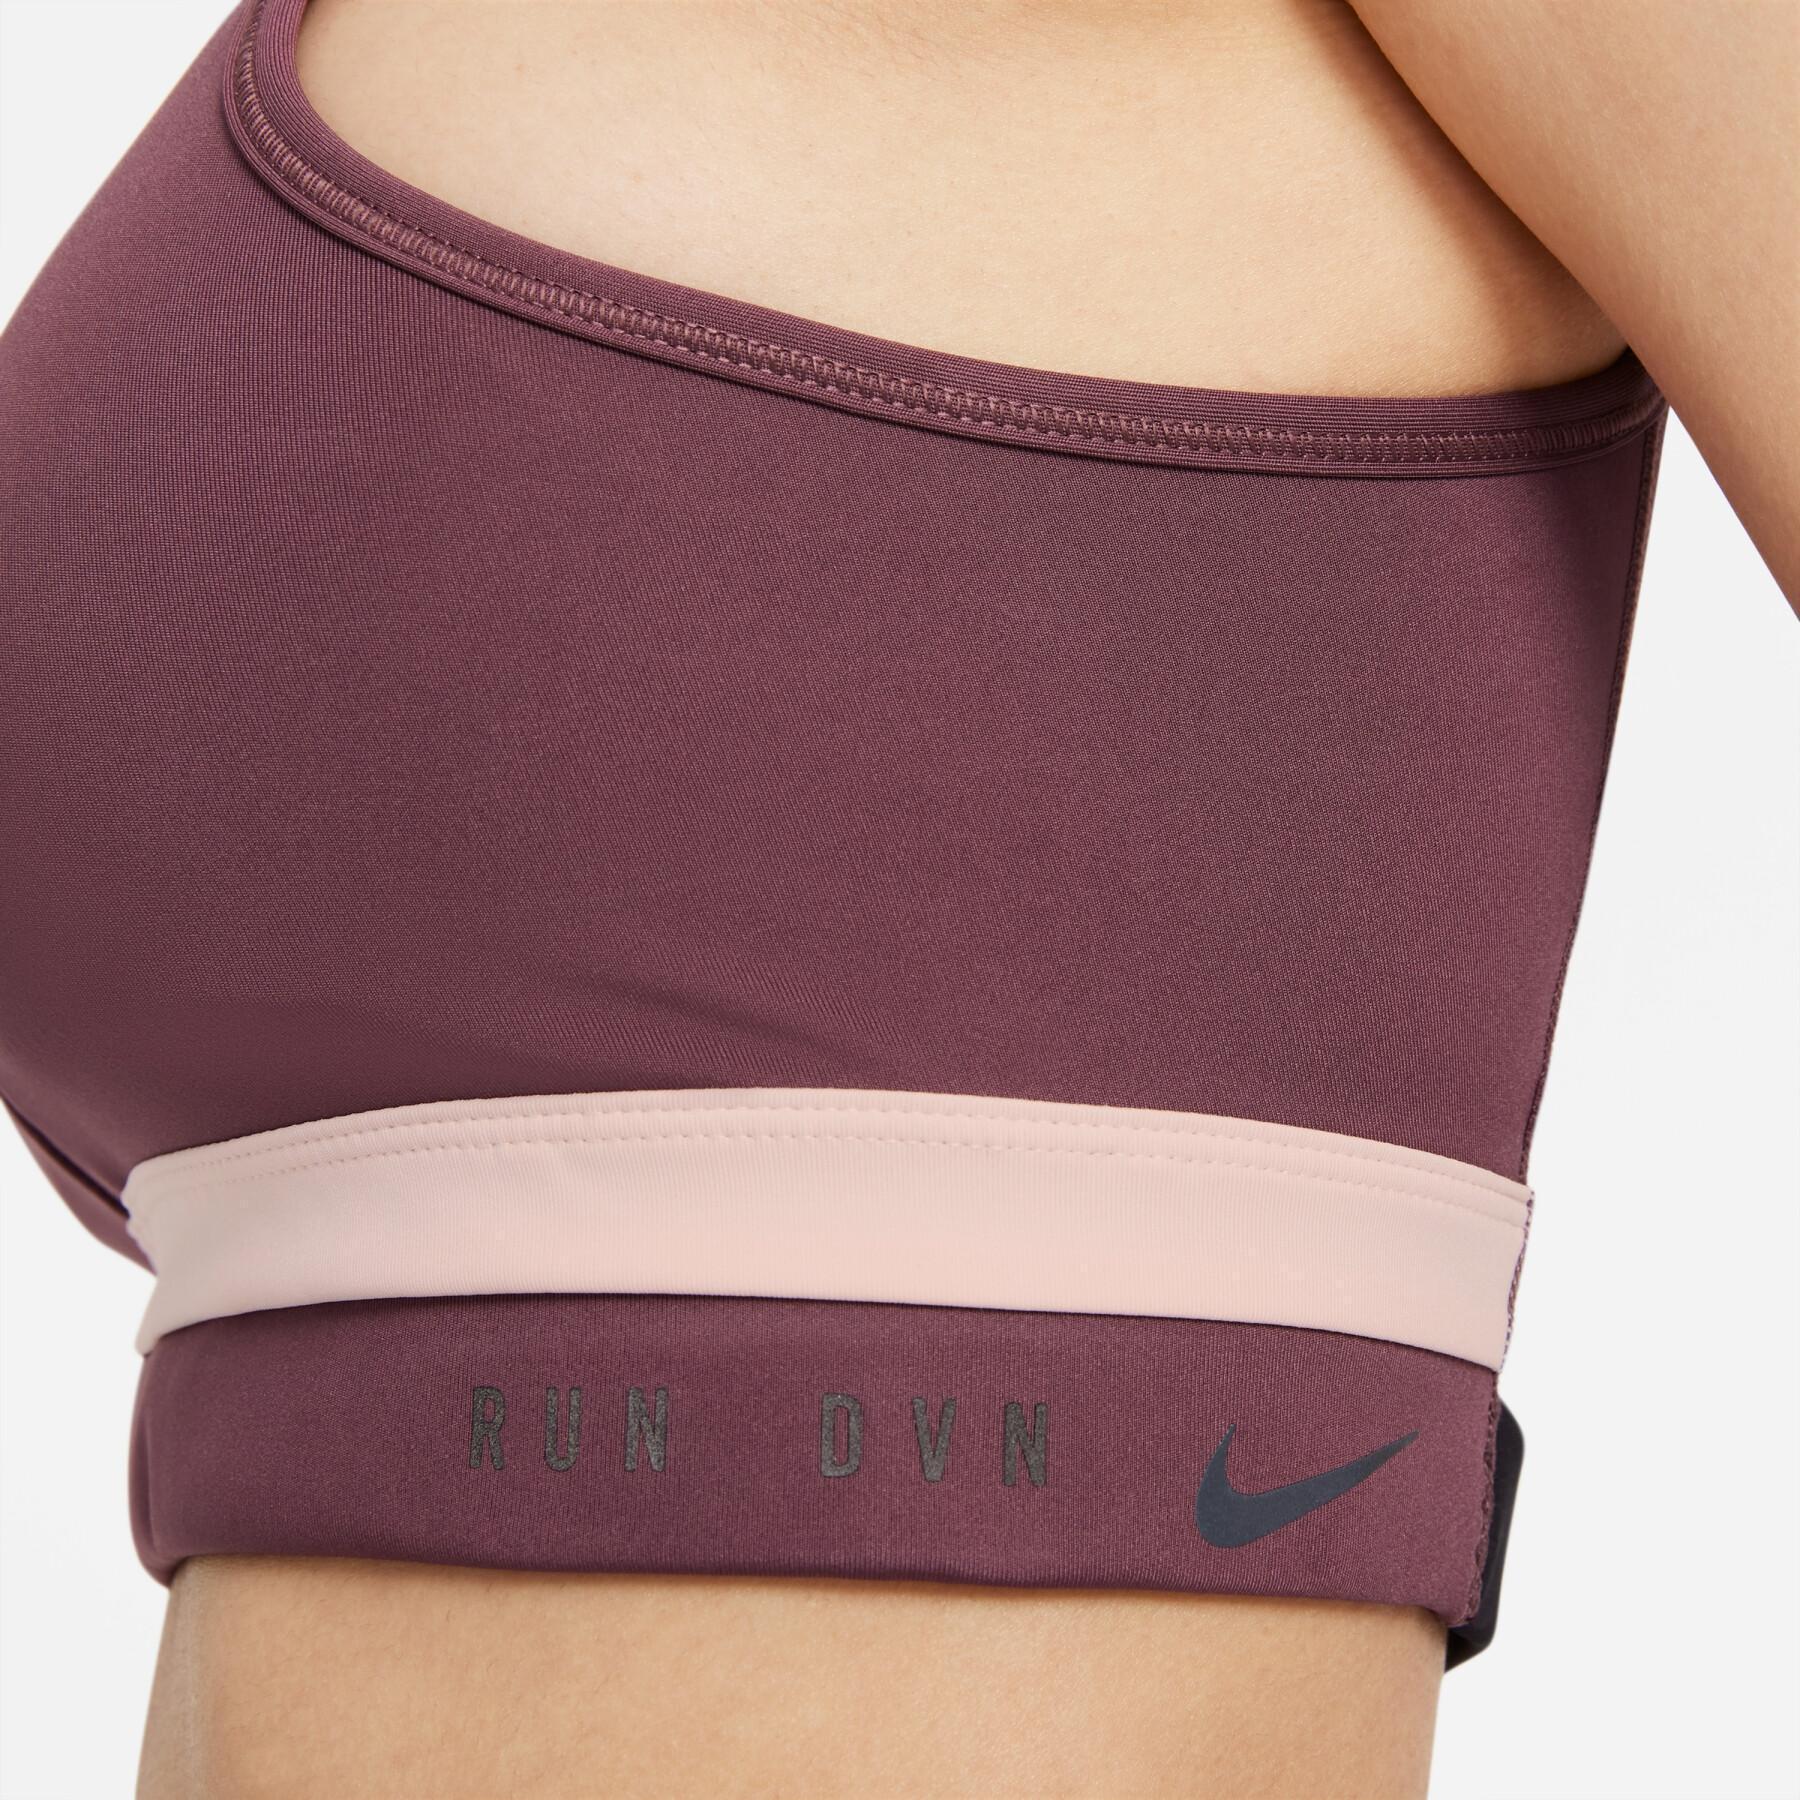 Women's bra Nike dynamic fit swsh ll rundvsn